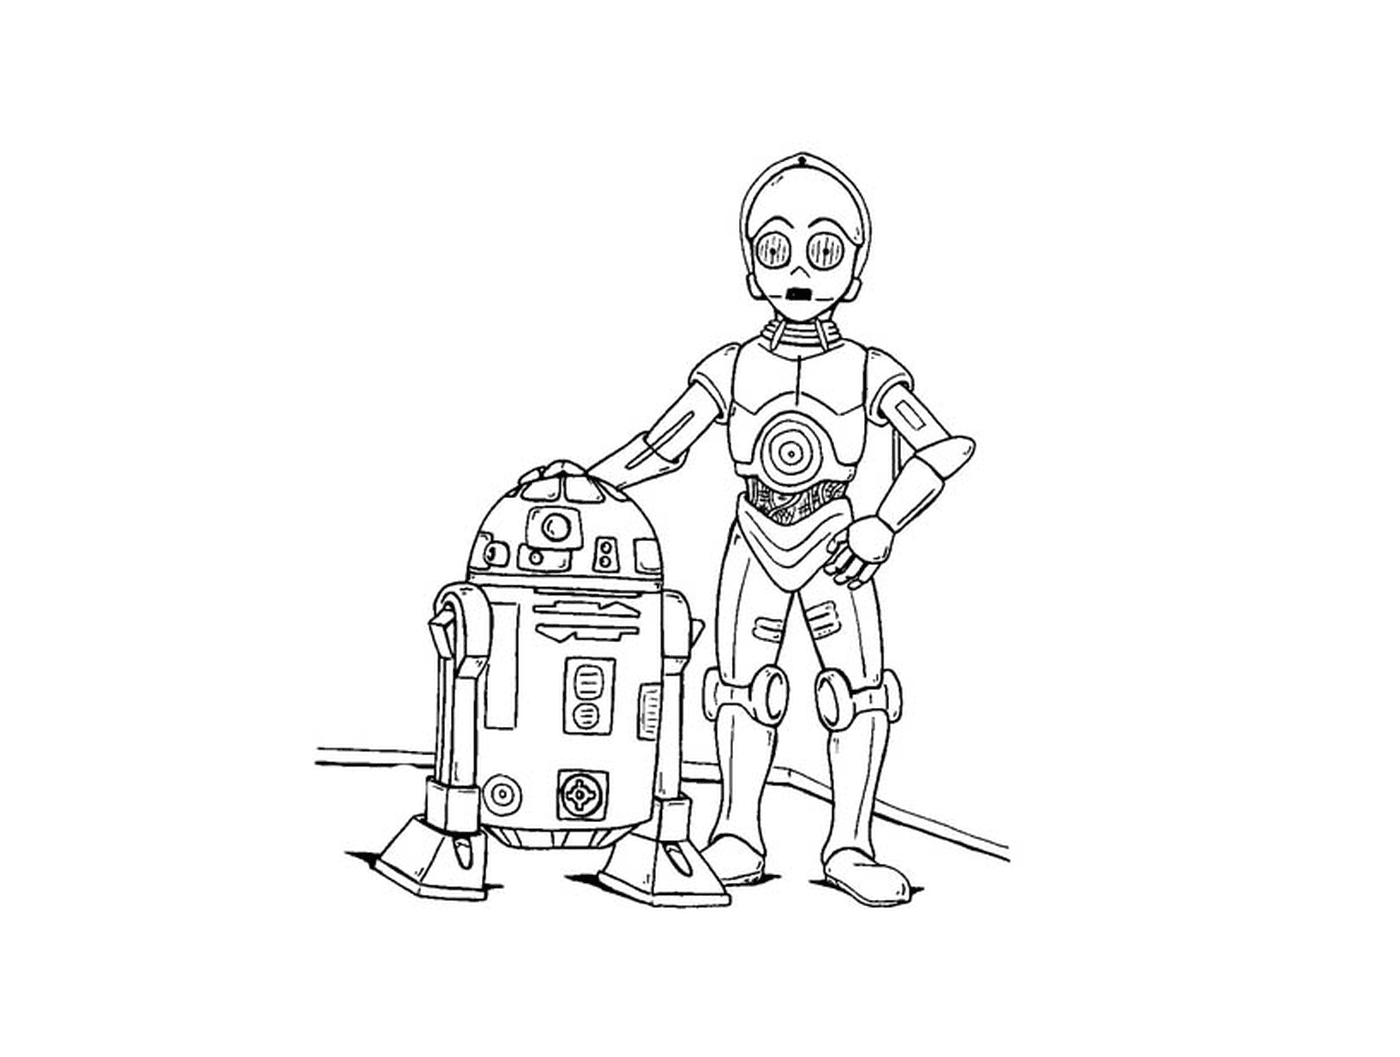  R2-D2 y C-3PO famosos 